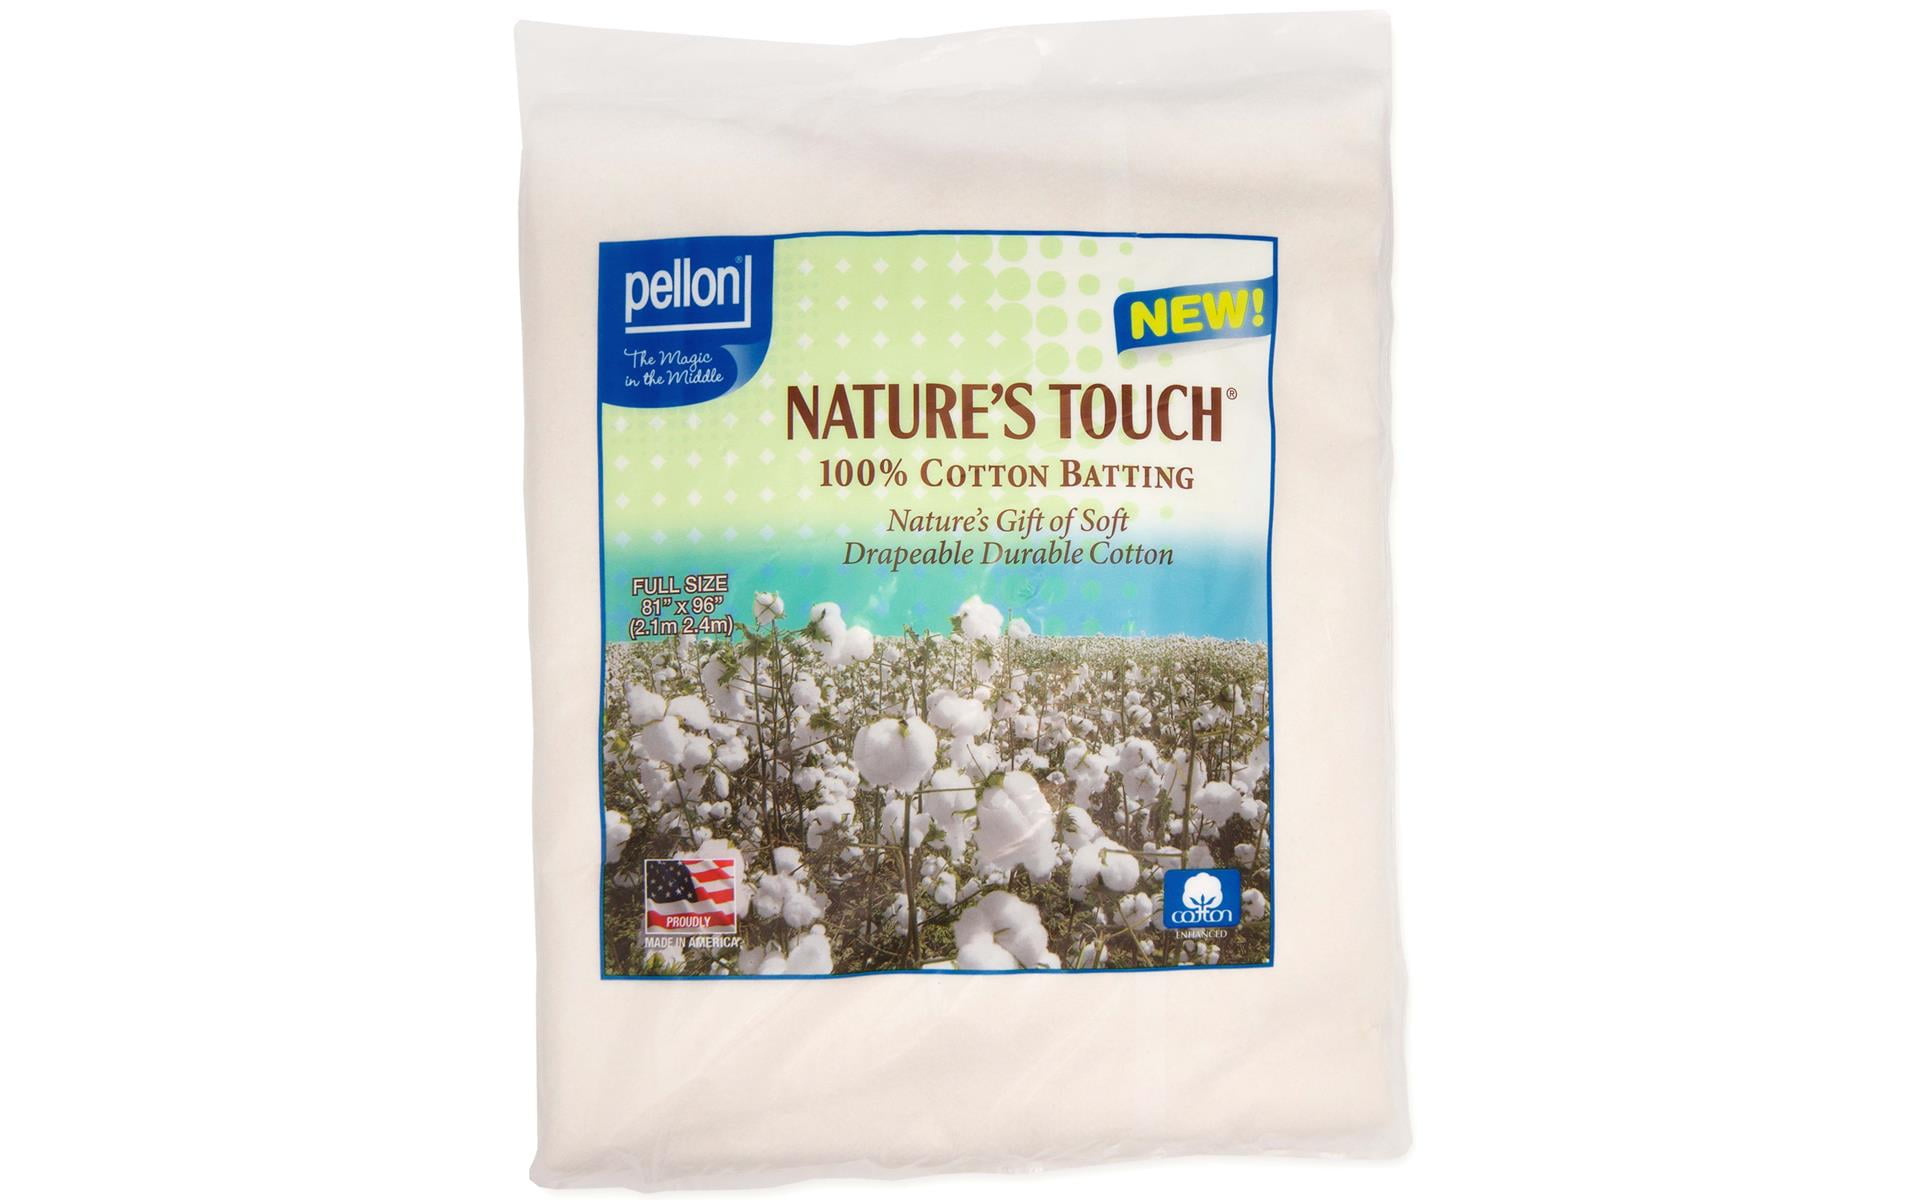 Pellon Nature's Touch Craft-size White Cotton Batting